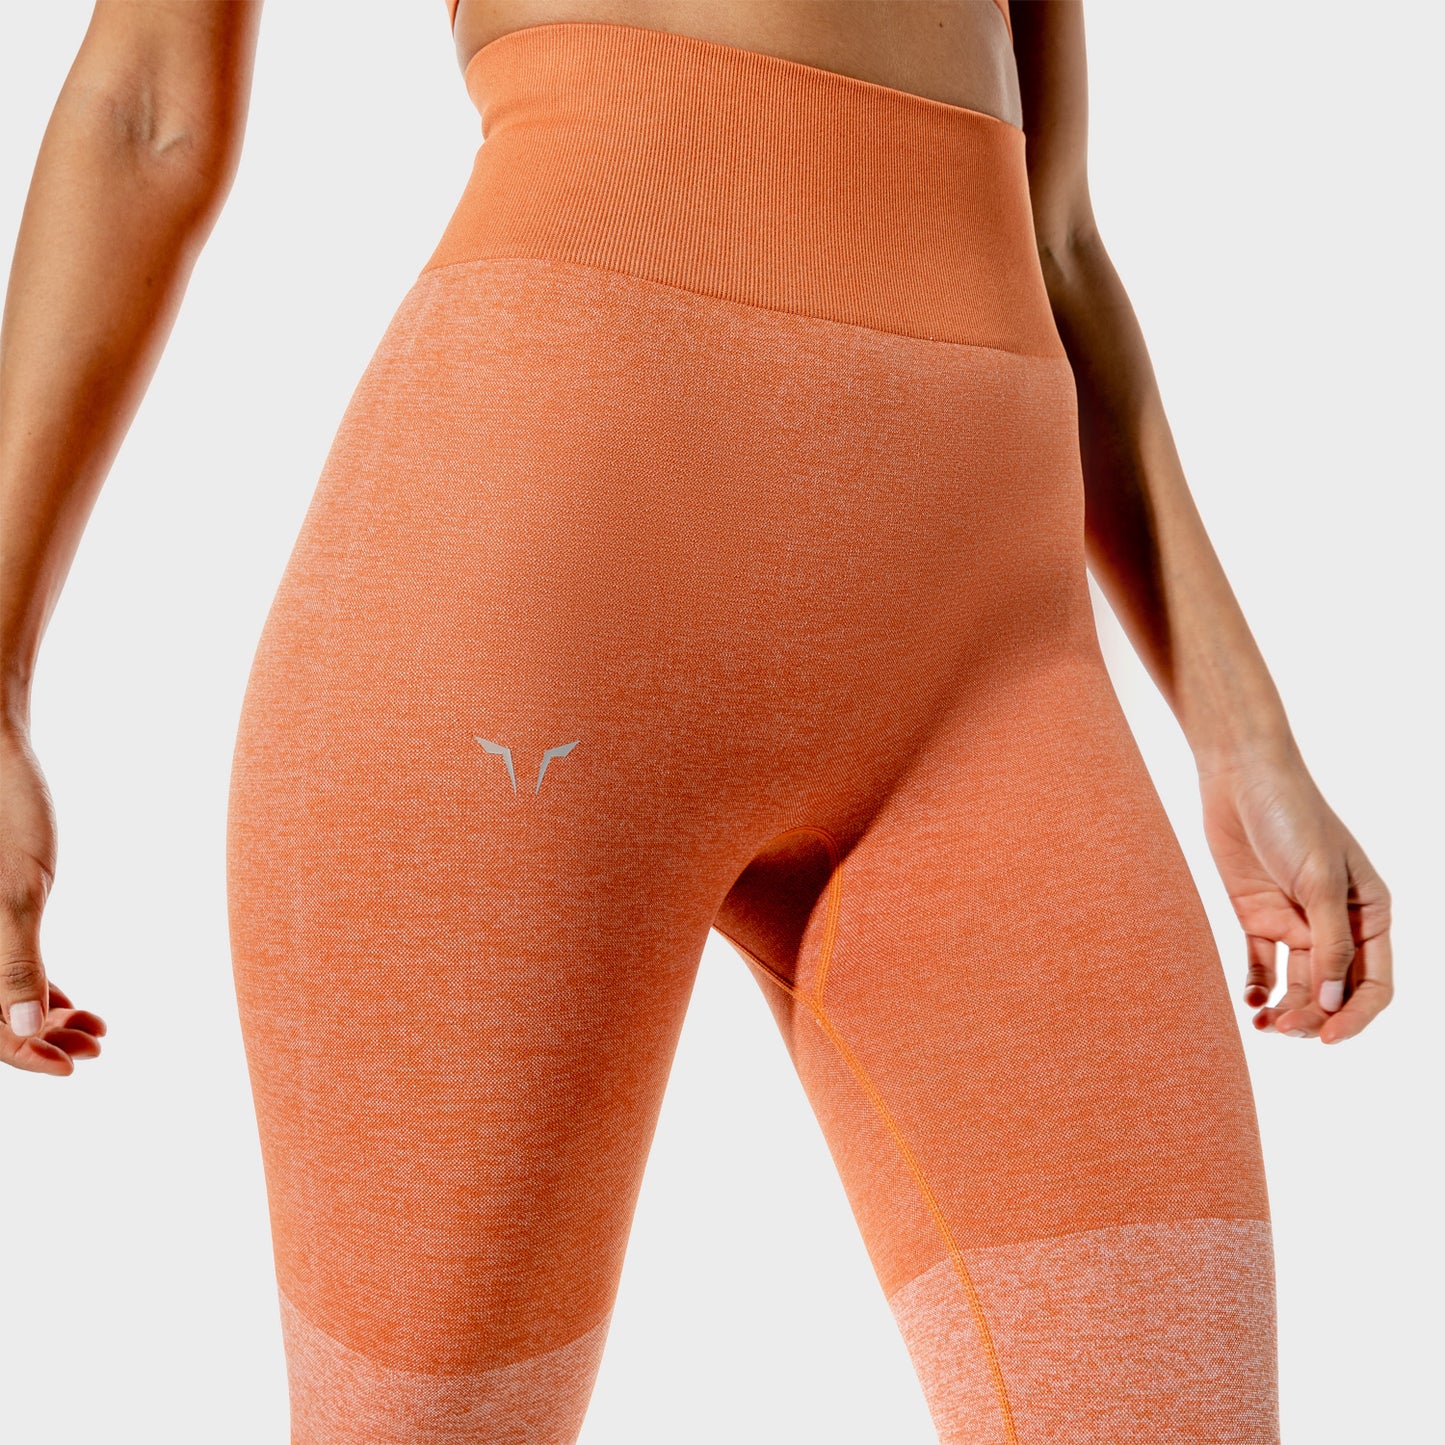 squatwolf-workout-leggings-womens-fitness-seamless-leggings-orange-gym-wear-for-women